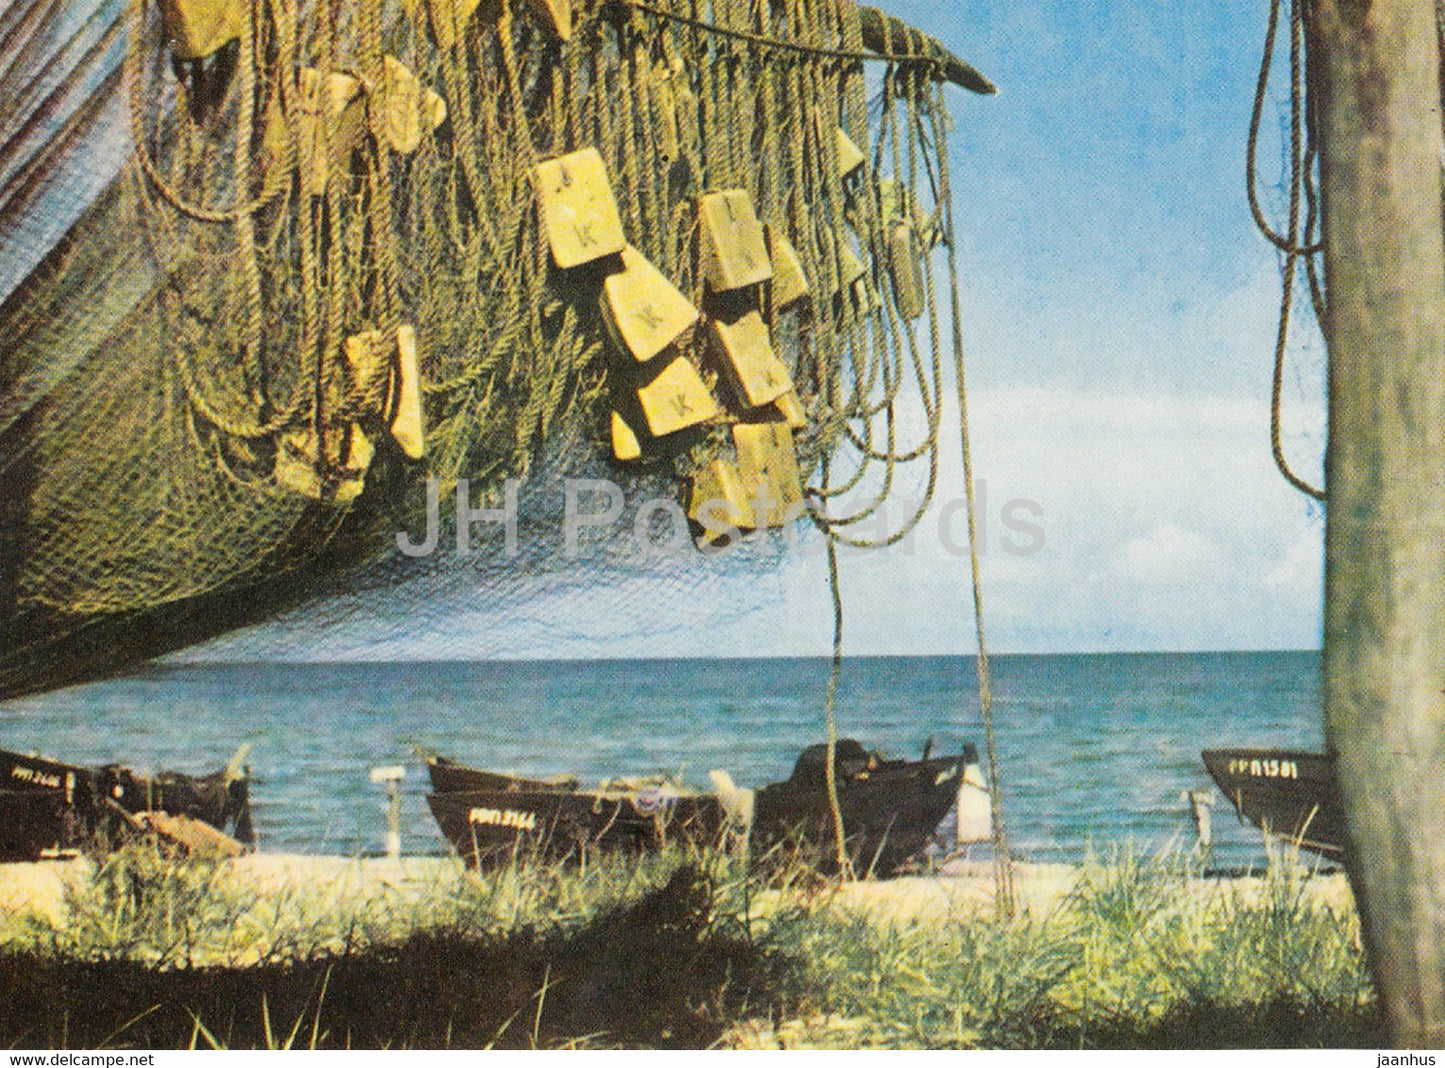 Jurmala - Lapmezciems - Nets on the shore - boat - Latvia USSR - unused - JH Postcards